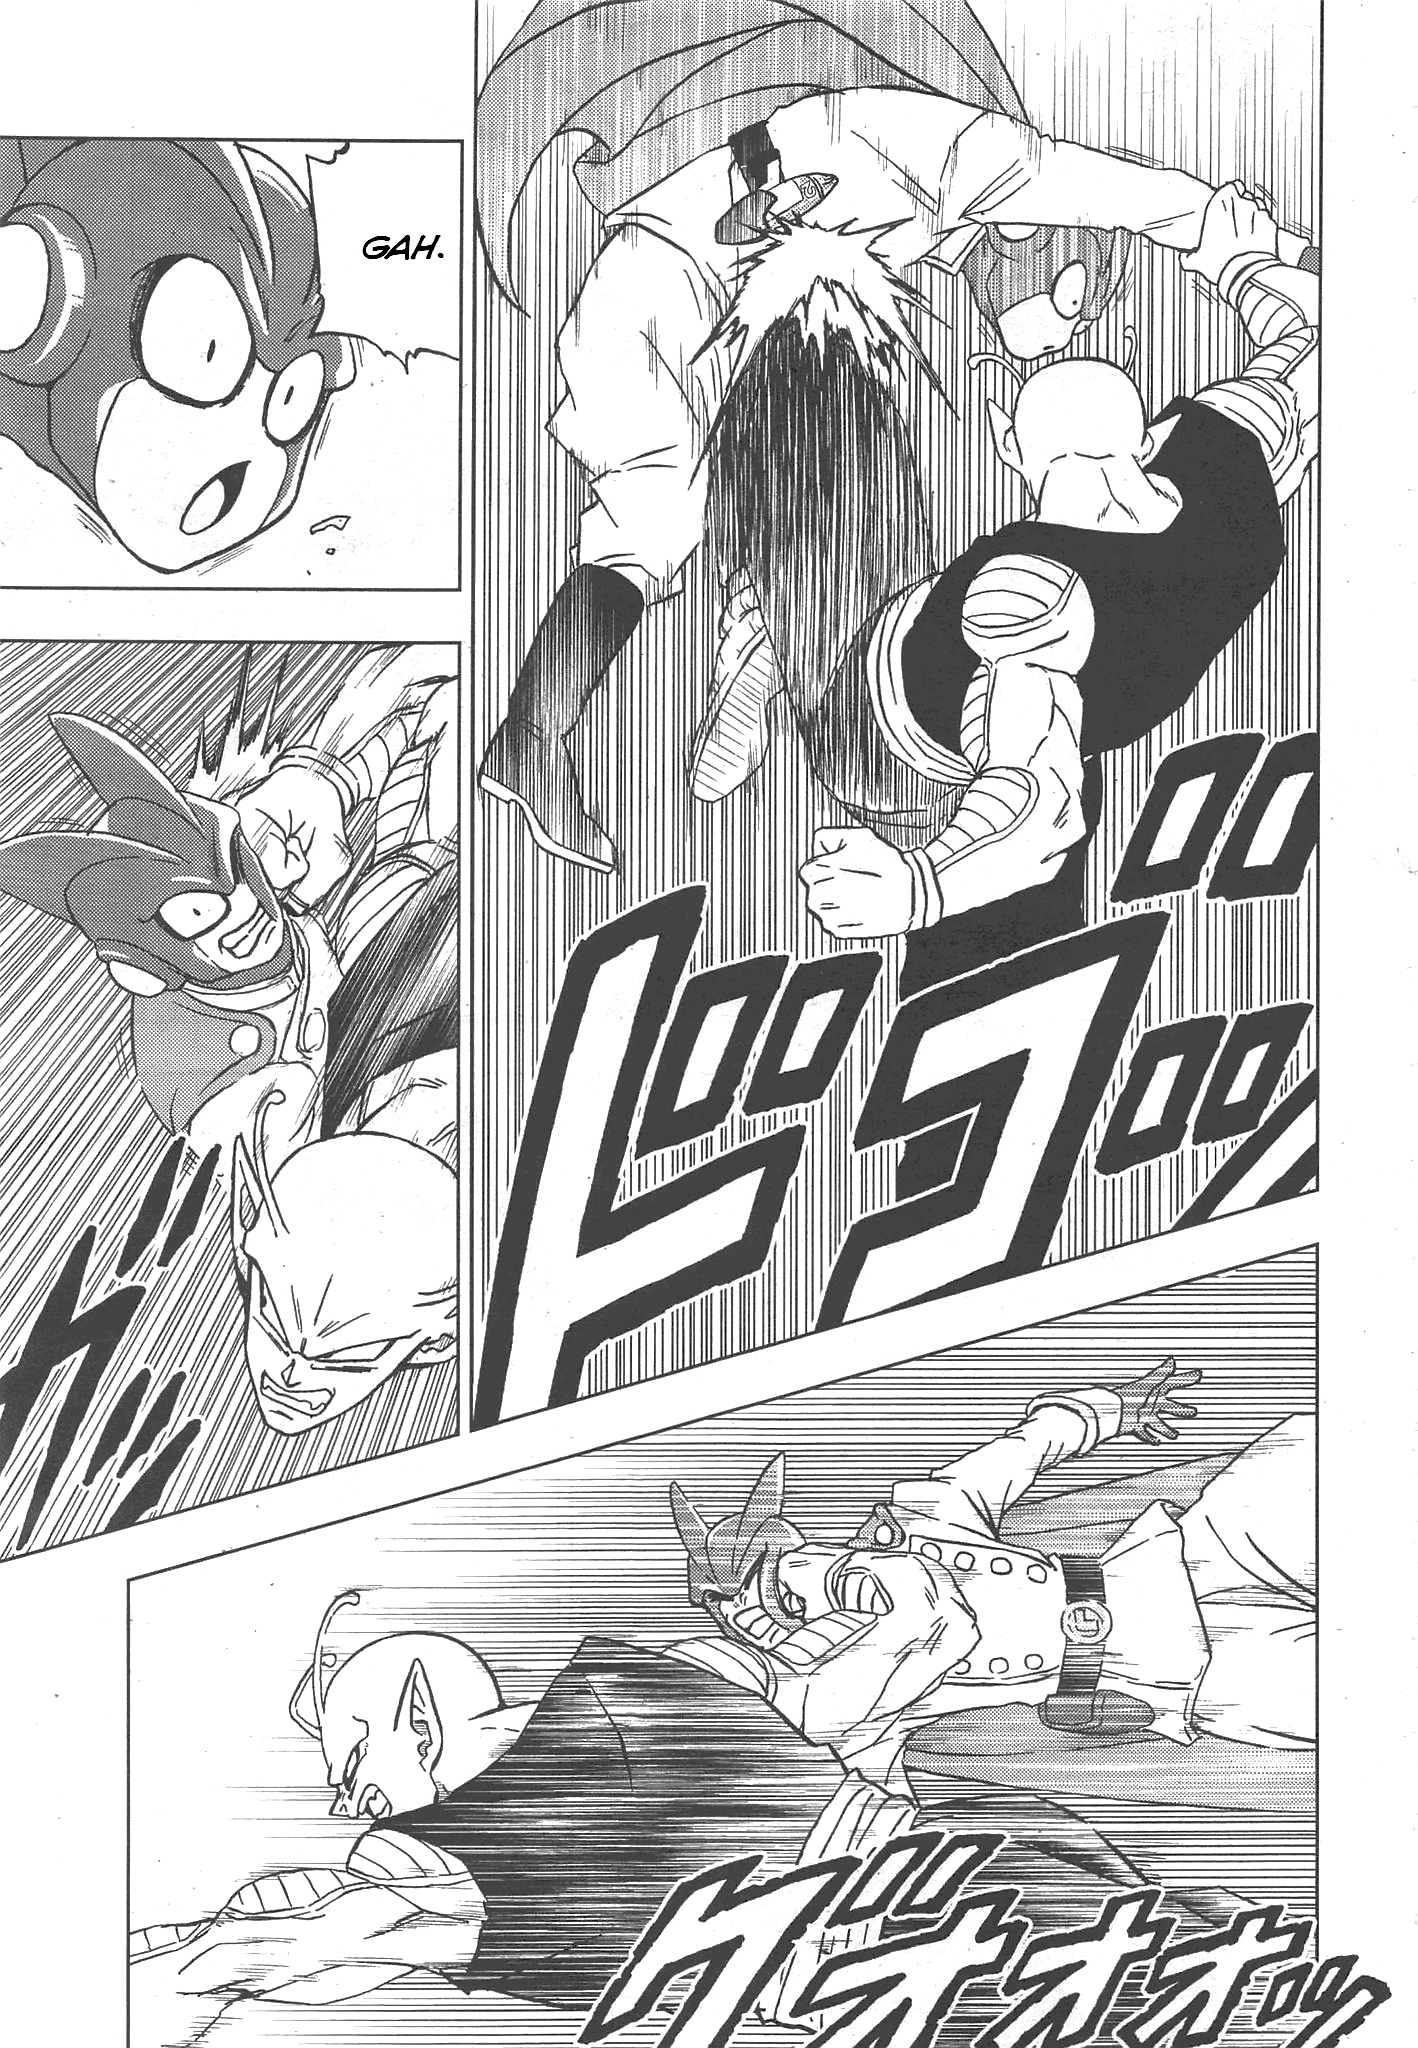 Trang 16 - Dragon Ball Super 51